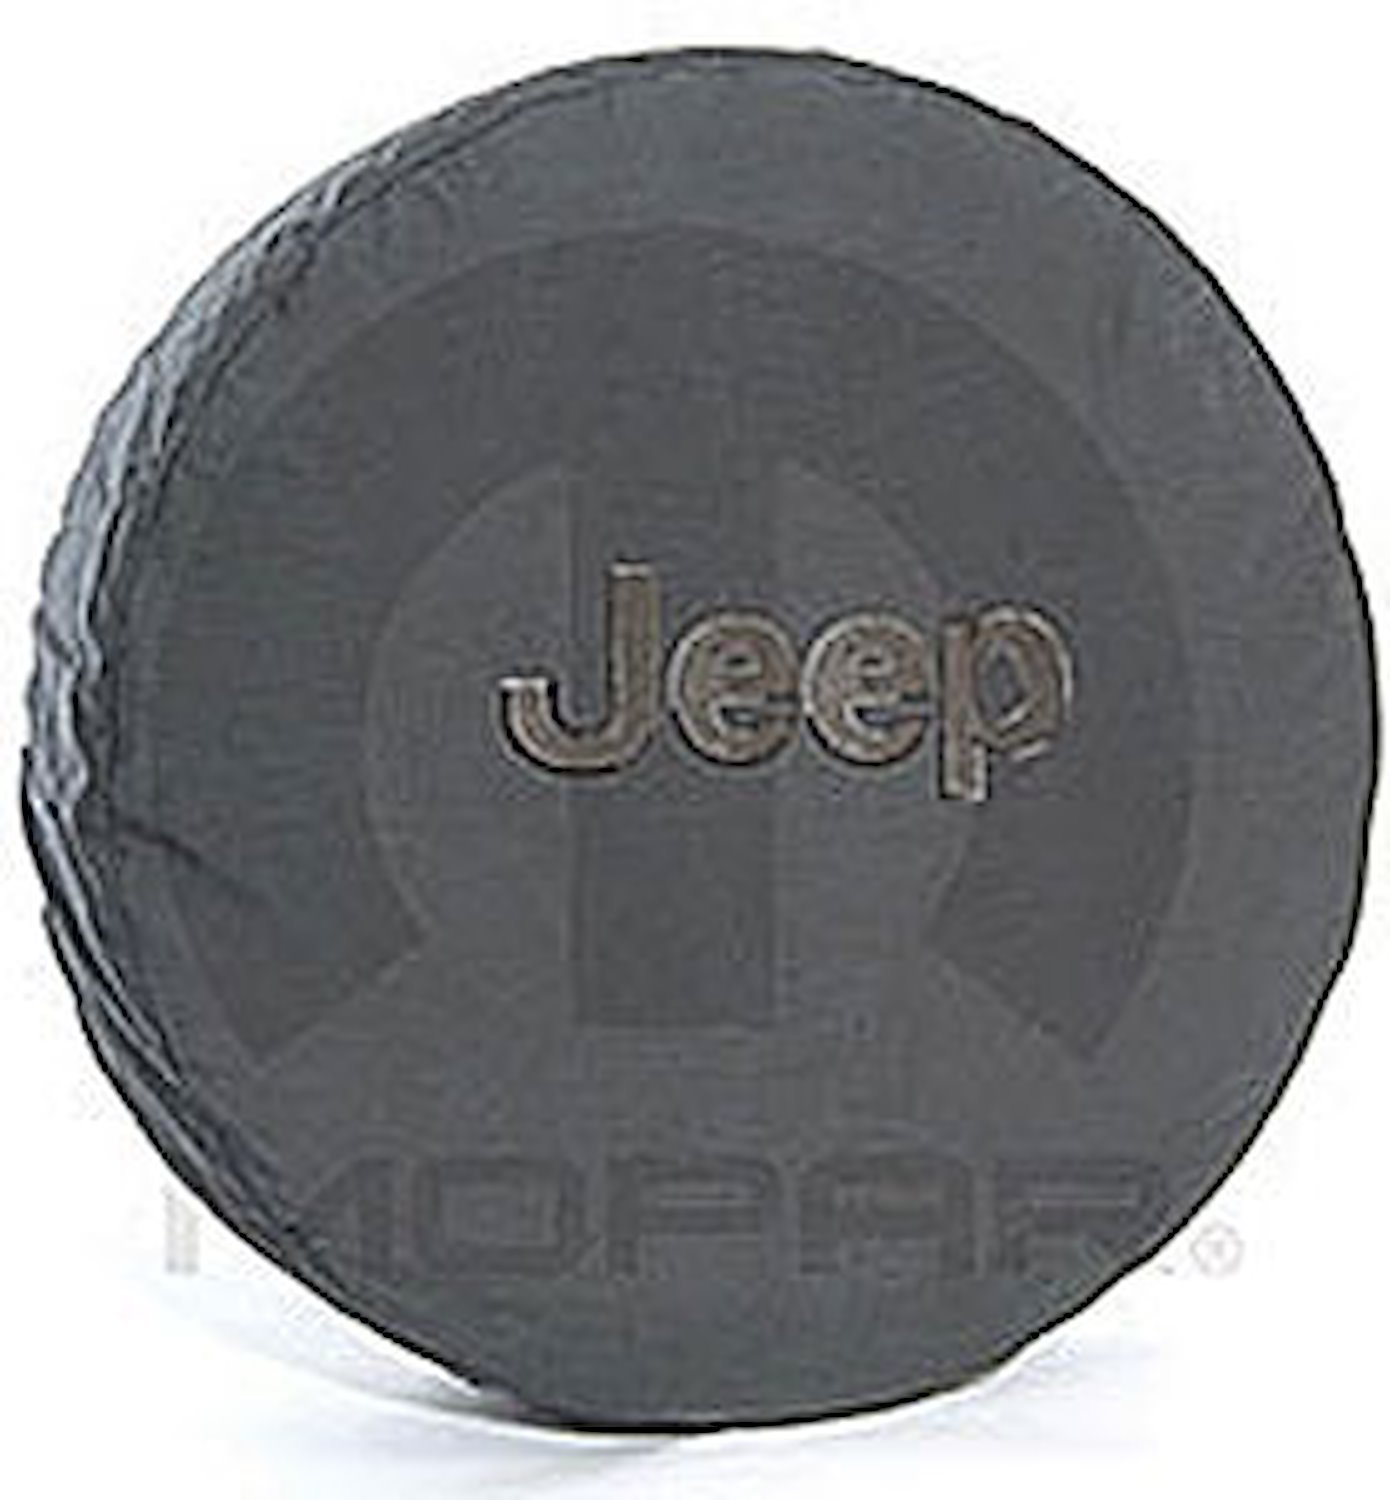 Spare Tire Cover 2002-07 Jeep Liberty